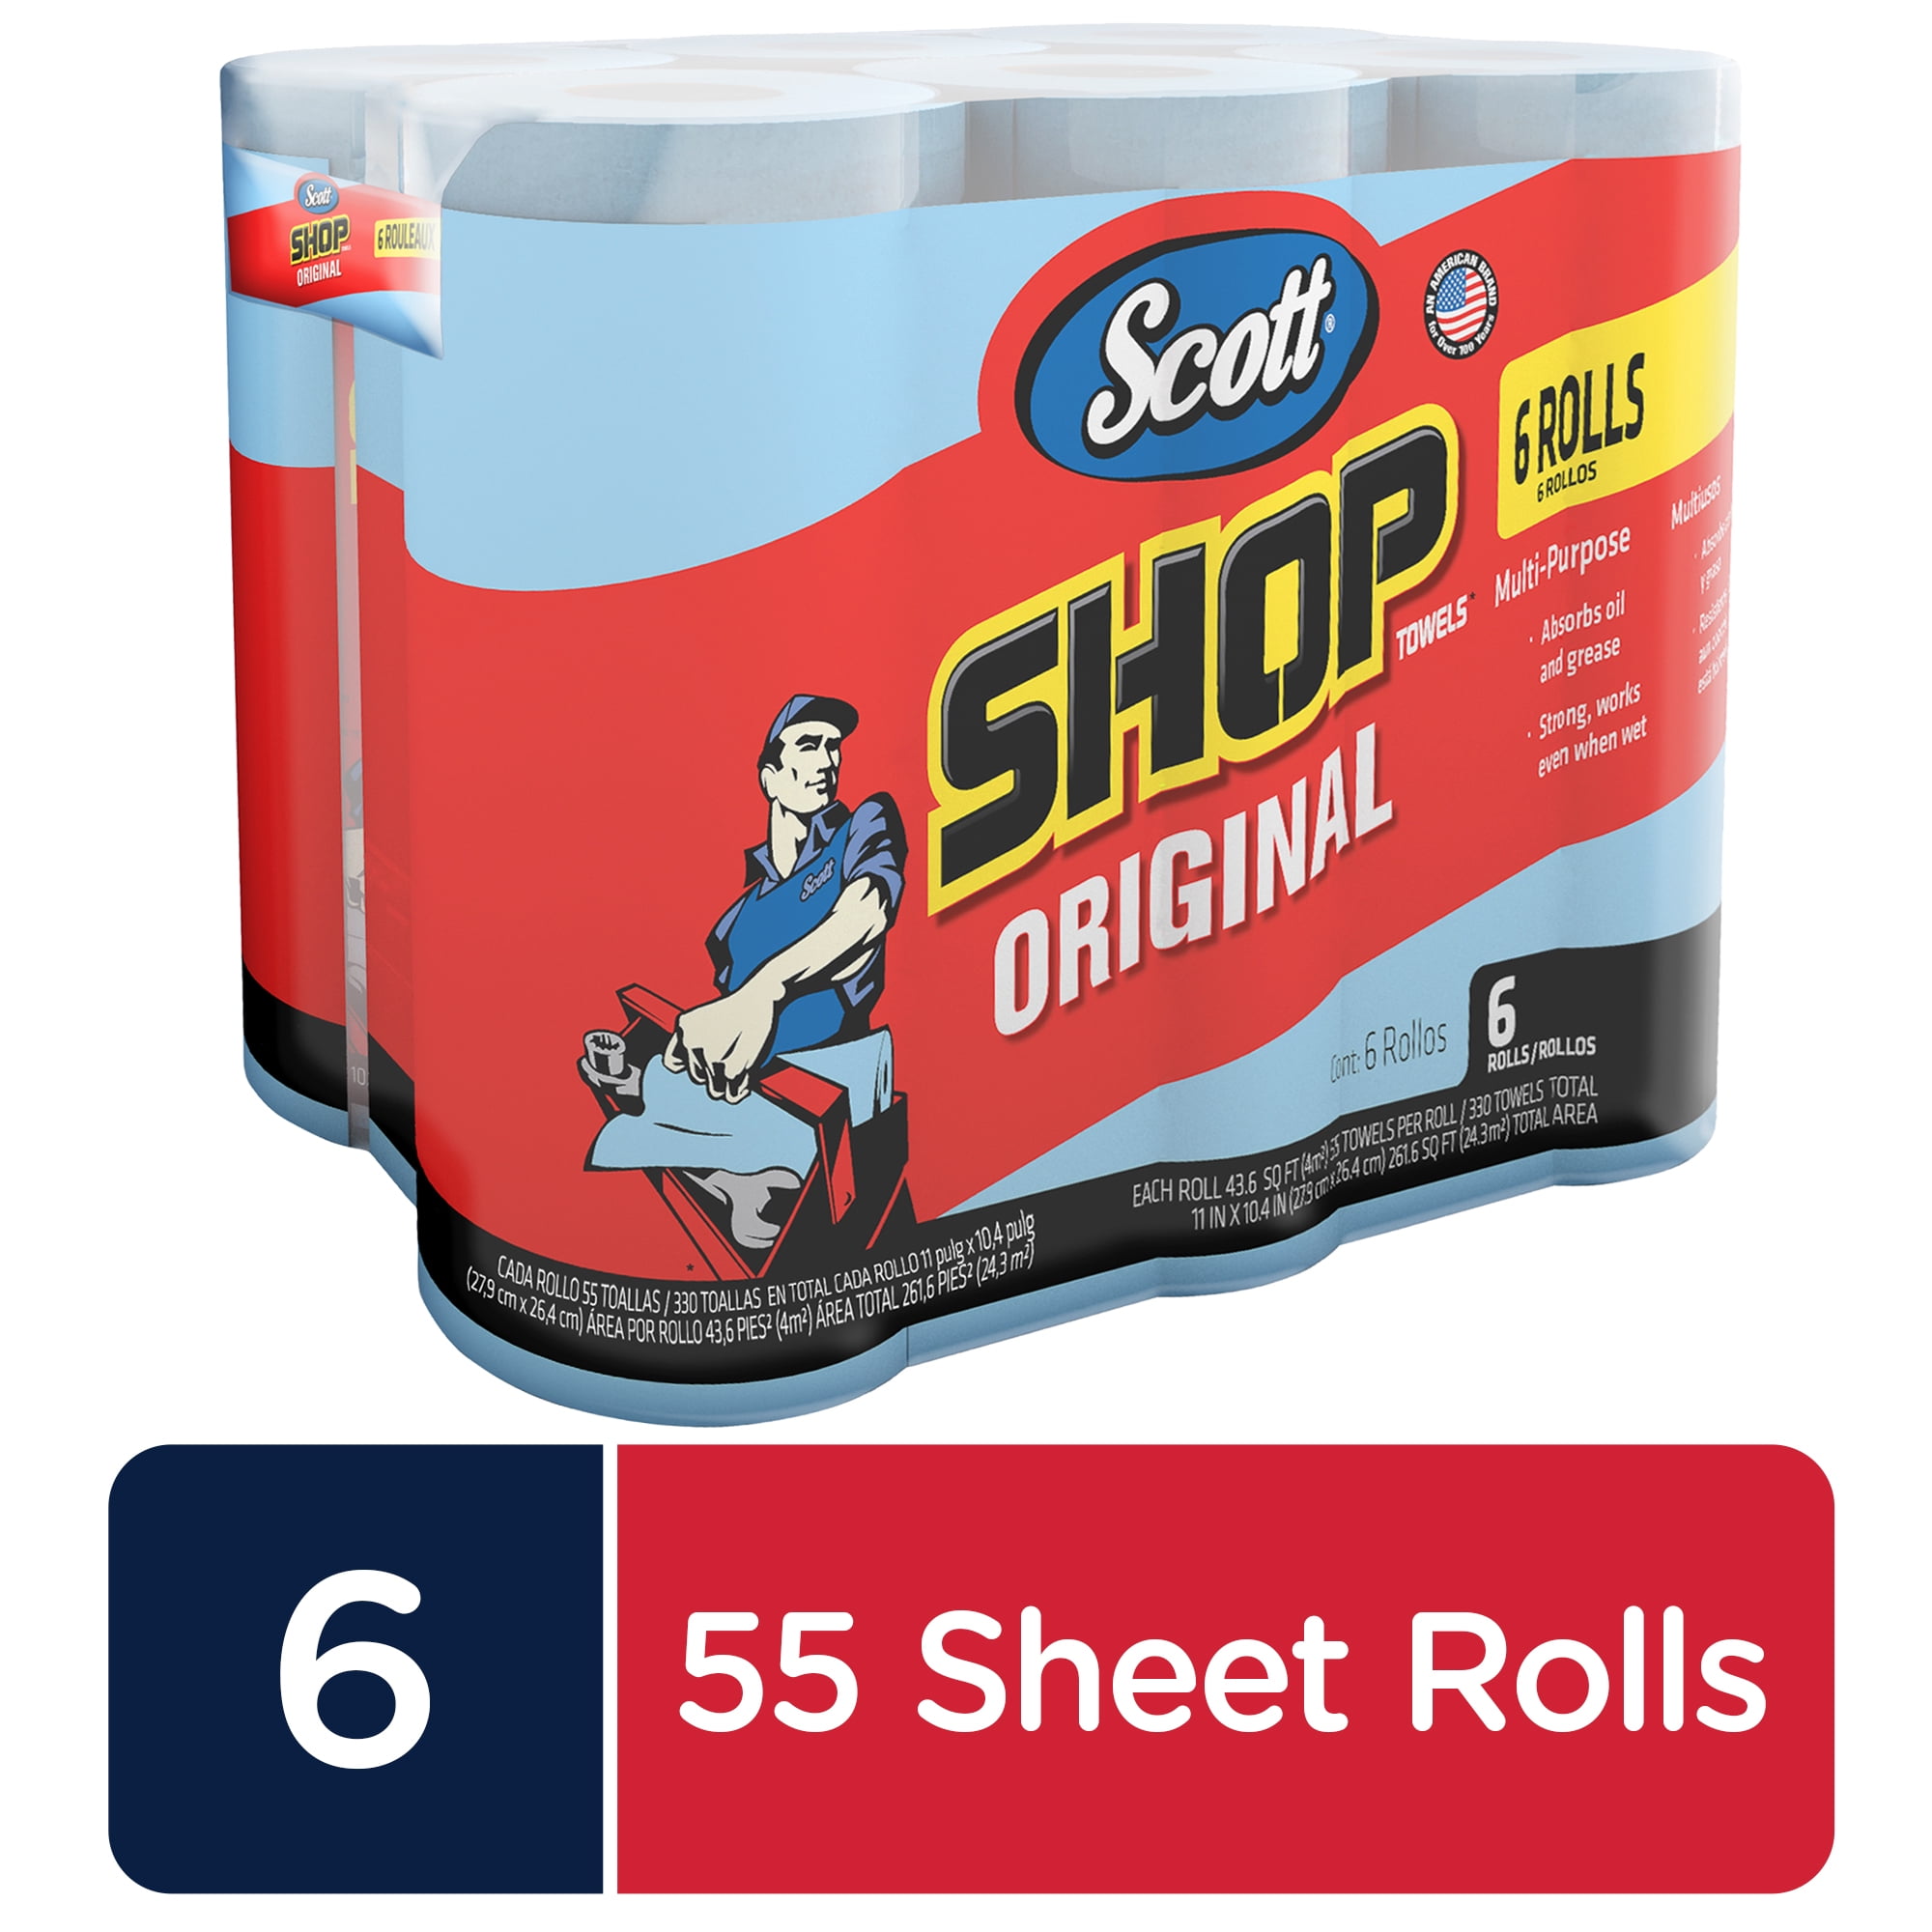 3X Stronger when Wet 60 Sheets 6 ct Scott Professional Heavy Duty Shop Towels 